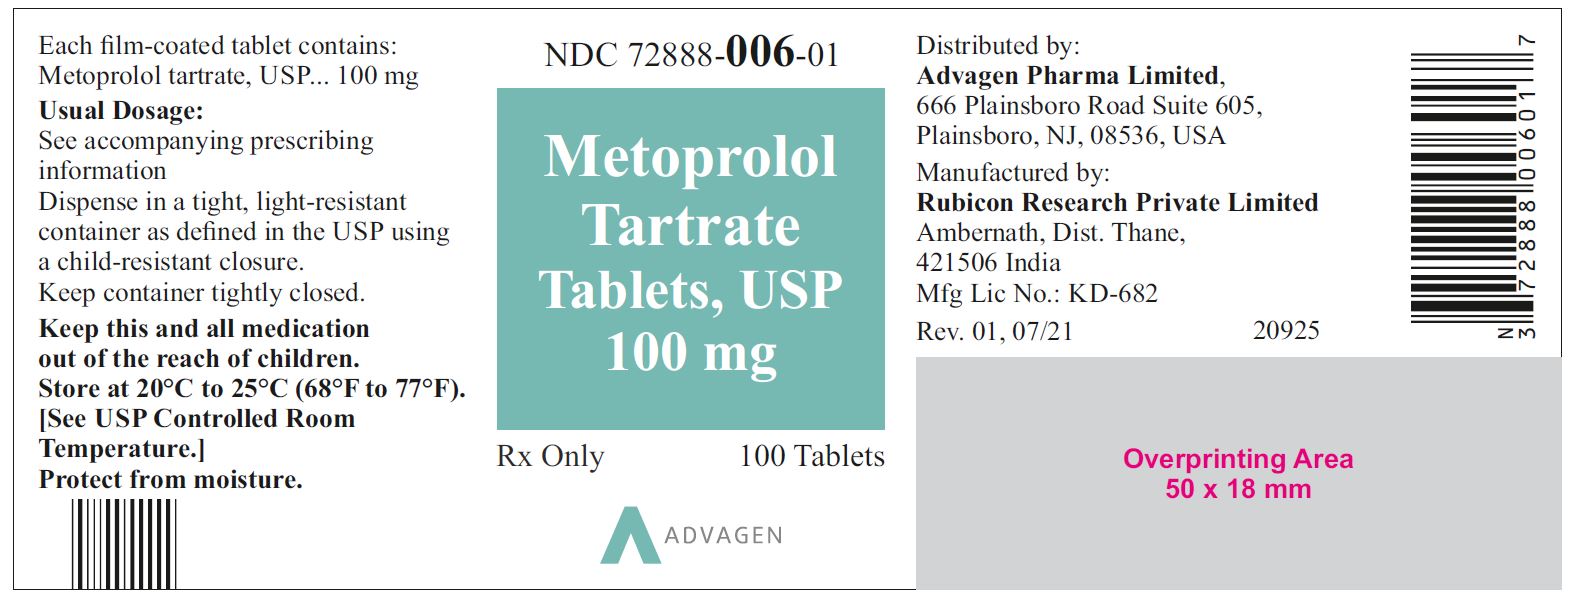 NDC: <a href=/NDC/72888-006-01>72888-006-01</a> - Metoprolol Tartrate Tablets, USP 100 mg - 100 Tablets